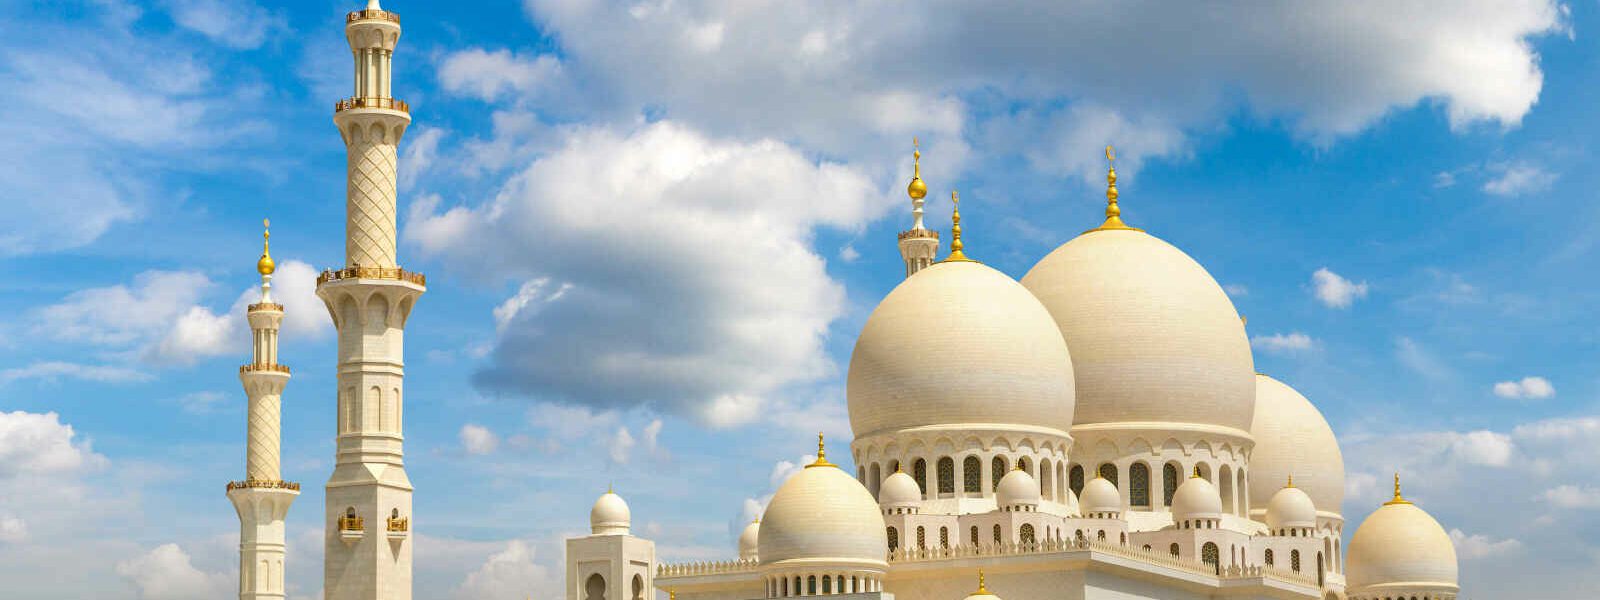 Vue d'ensemble, Mosquée Sheikh Zayed, Abou Dhabi, Emirats Arabes Unis